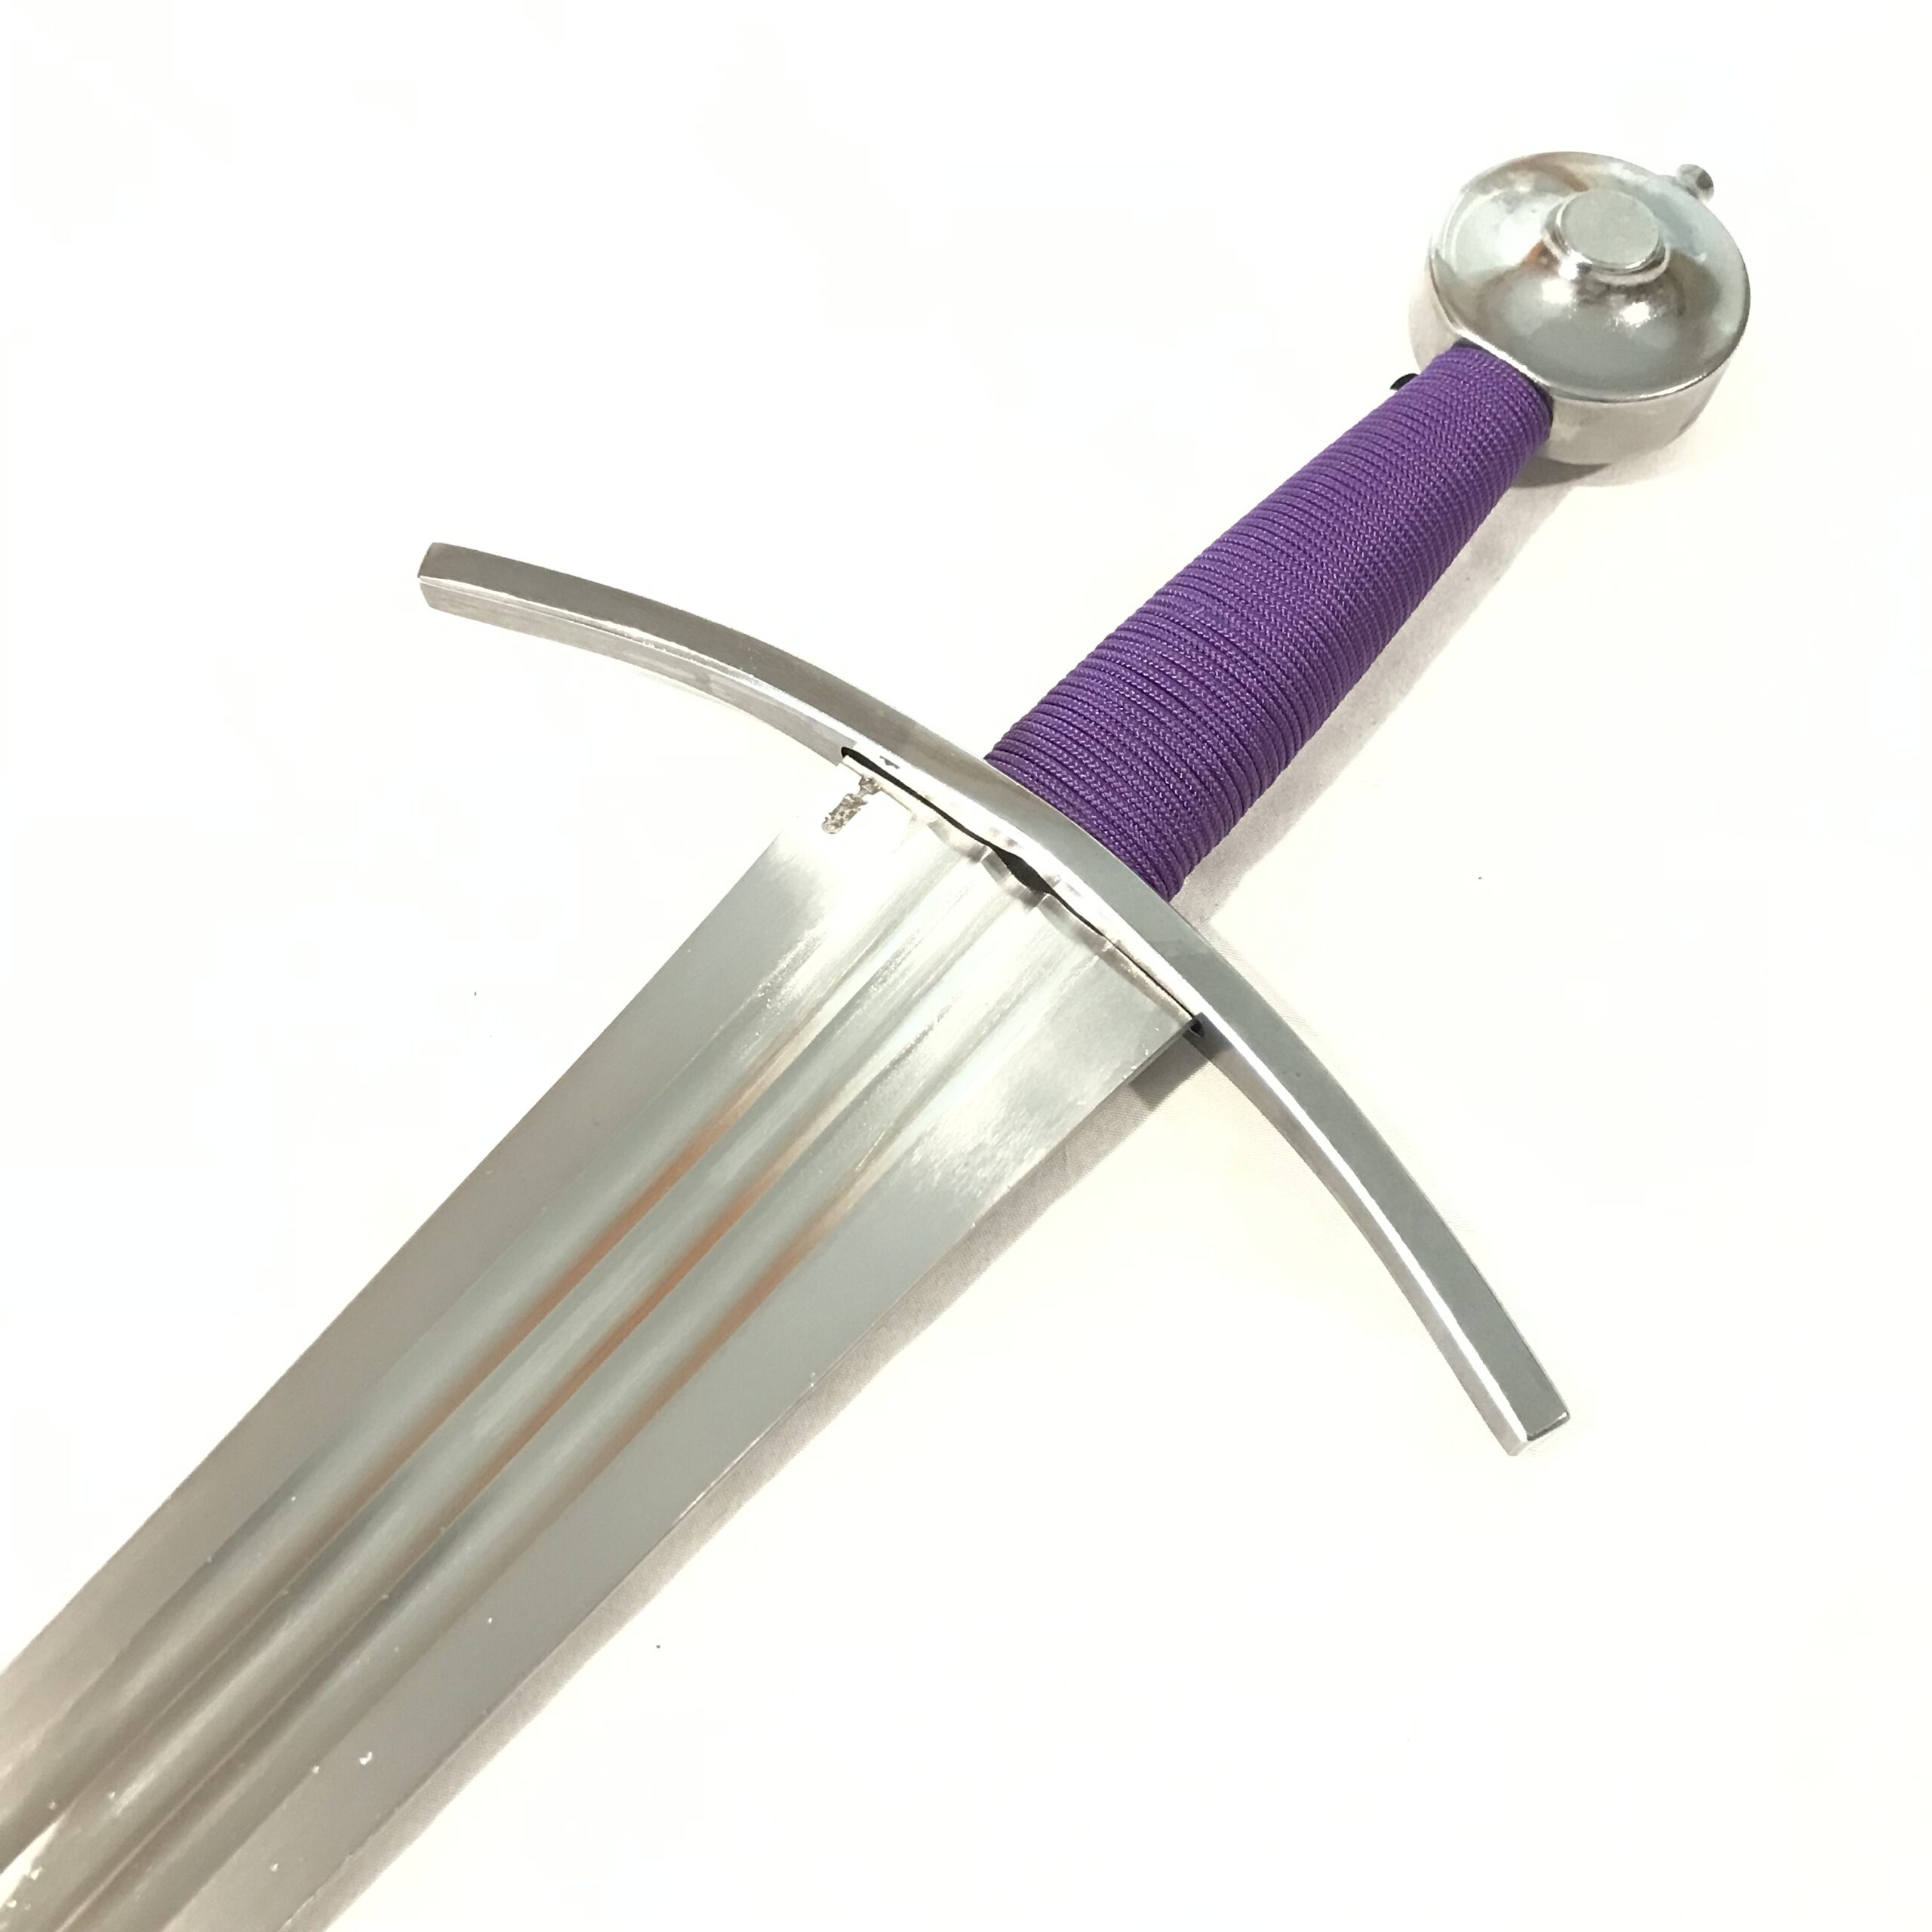 MM Liutger No Chape Purple Cord (4)